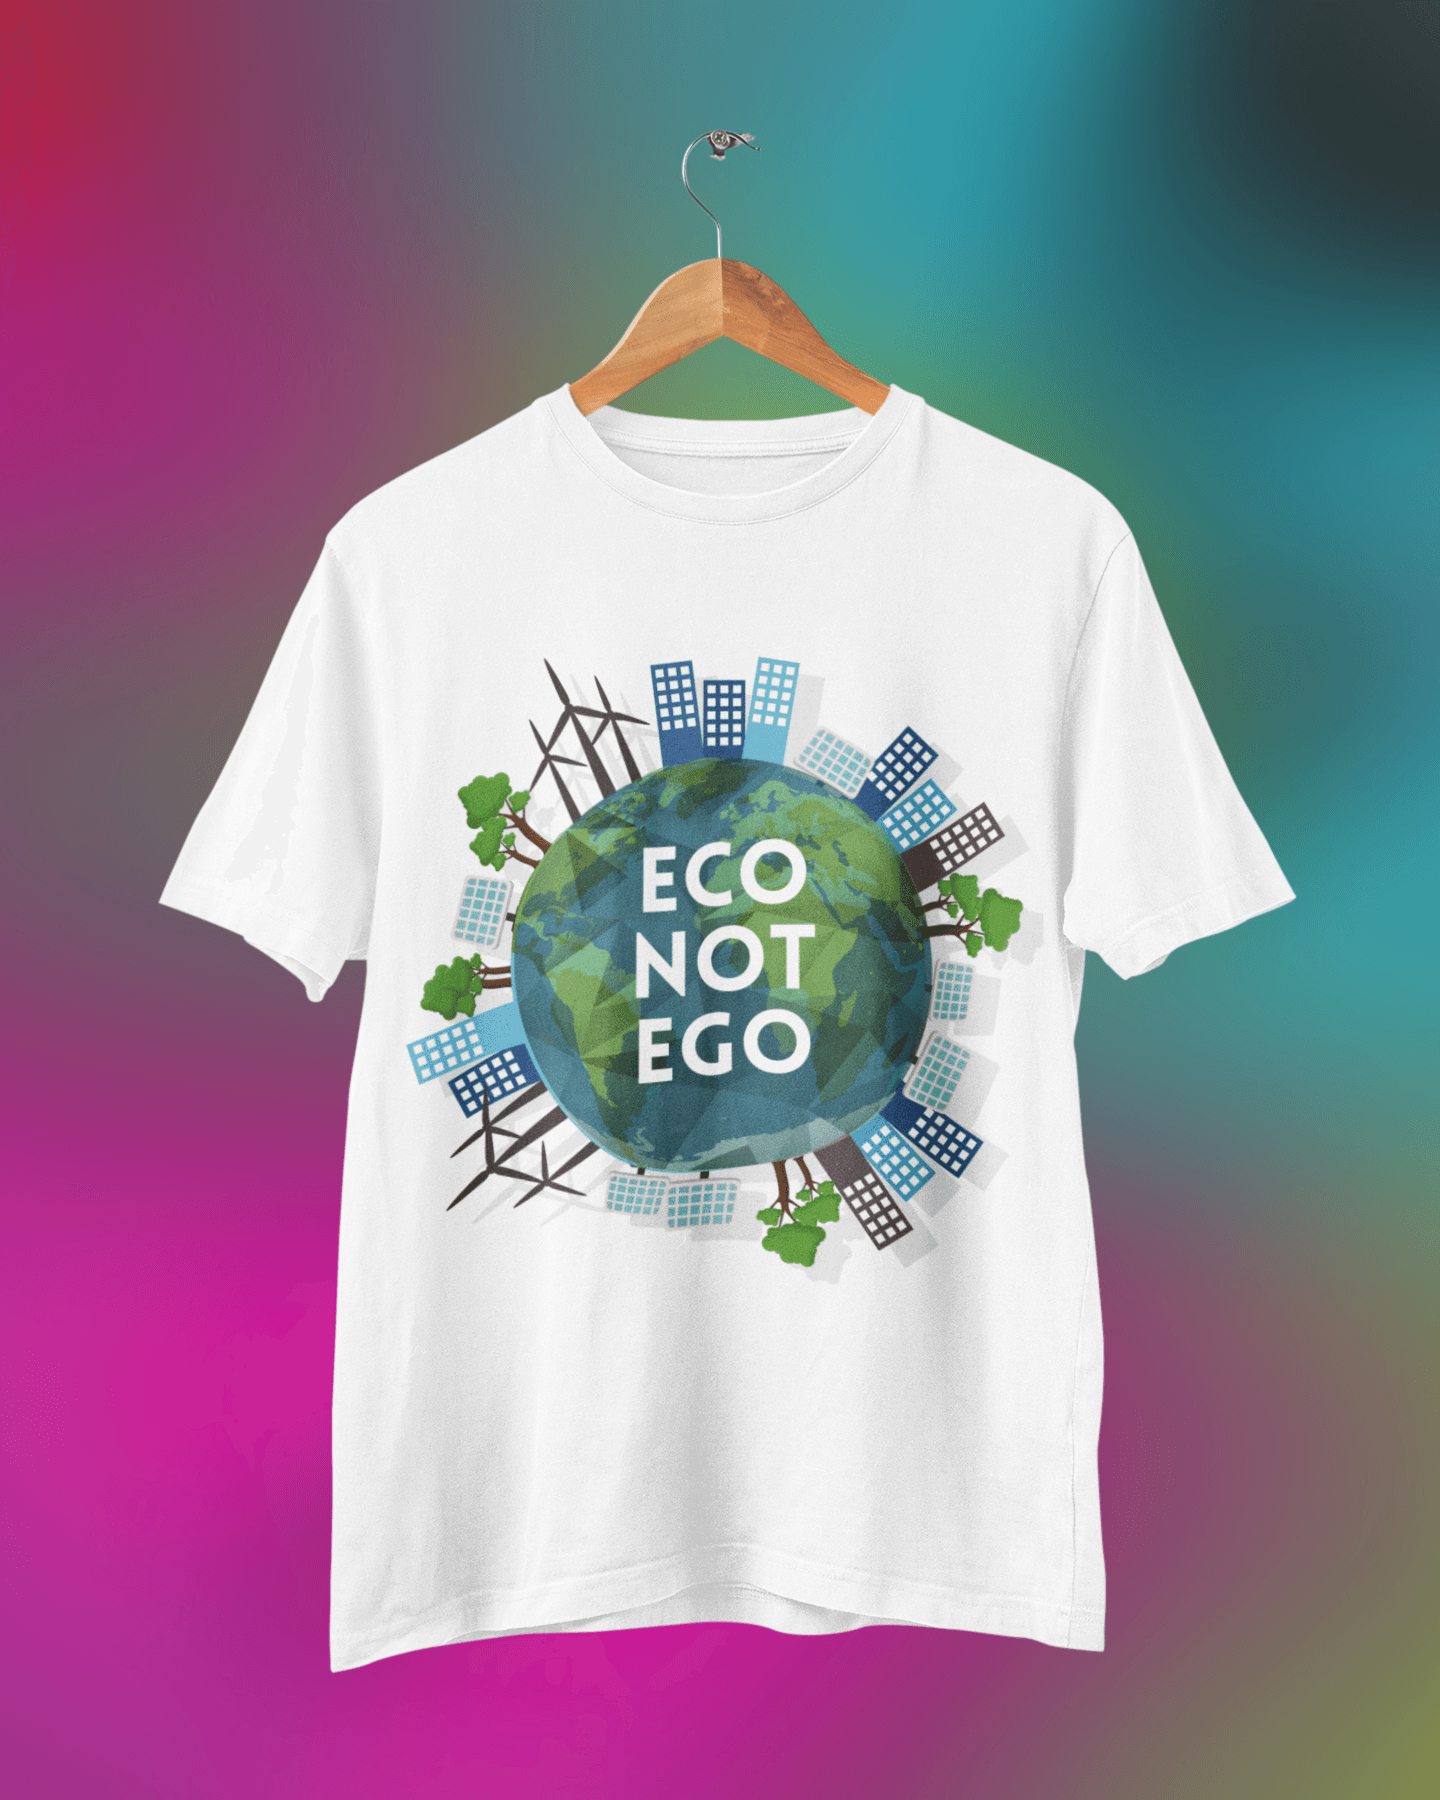 eco friendly t shirts